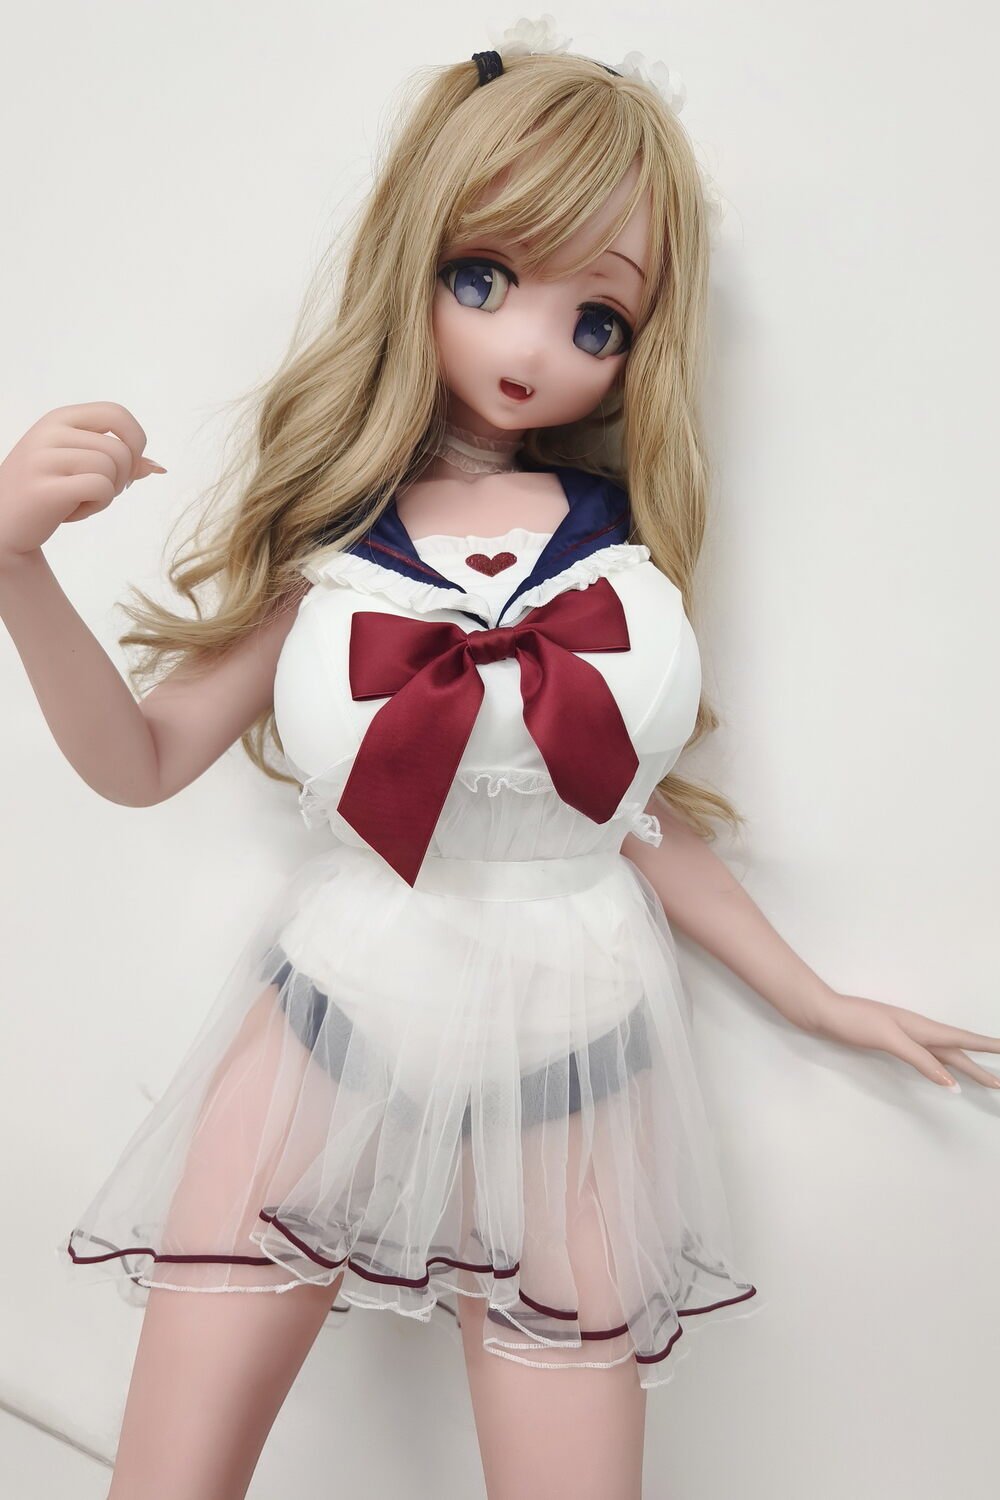 Elsababe 148cm/4ft10 Silicone Sex Doll – Haneda Nanako - Dolls inlove